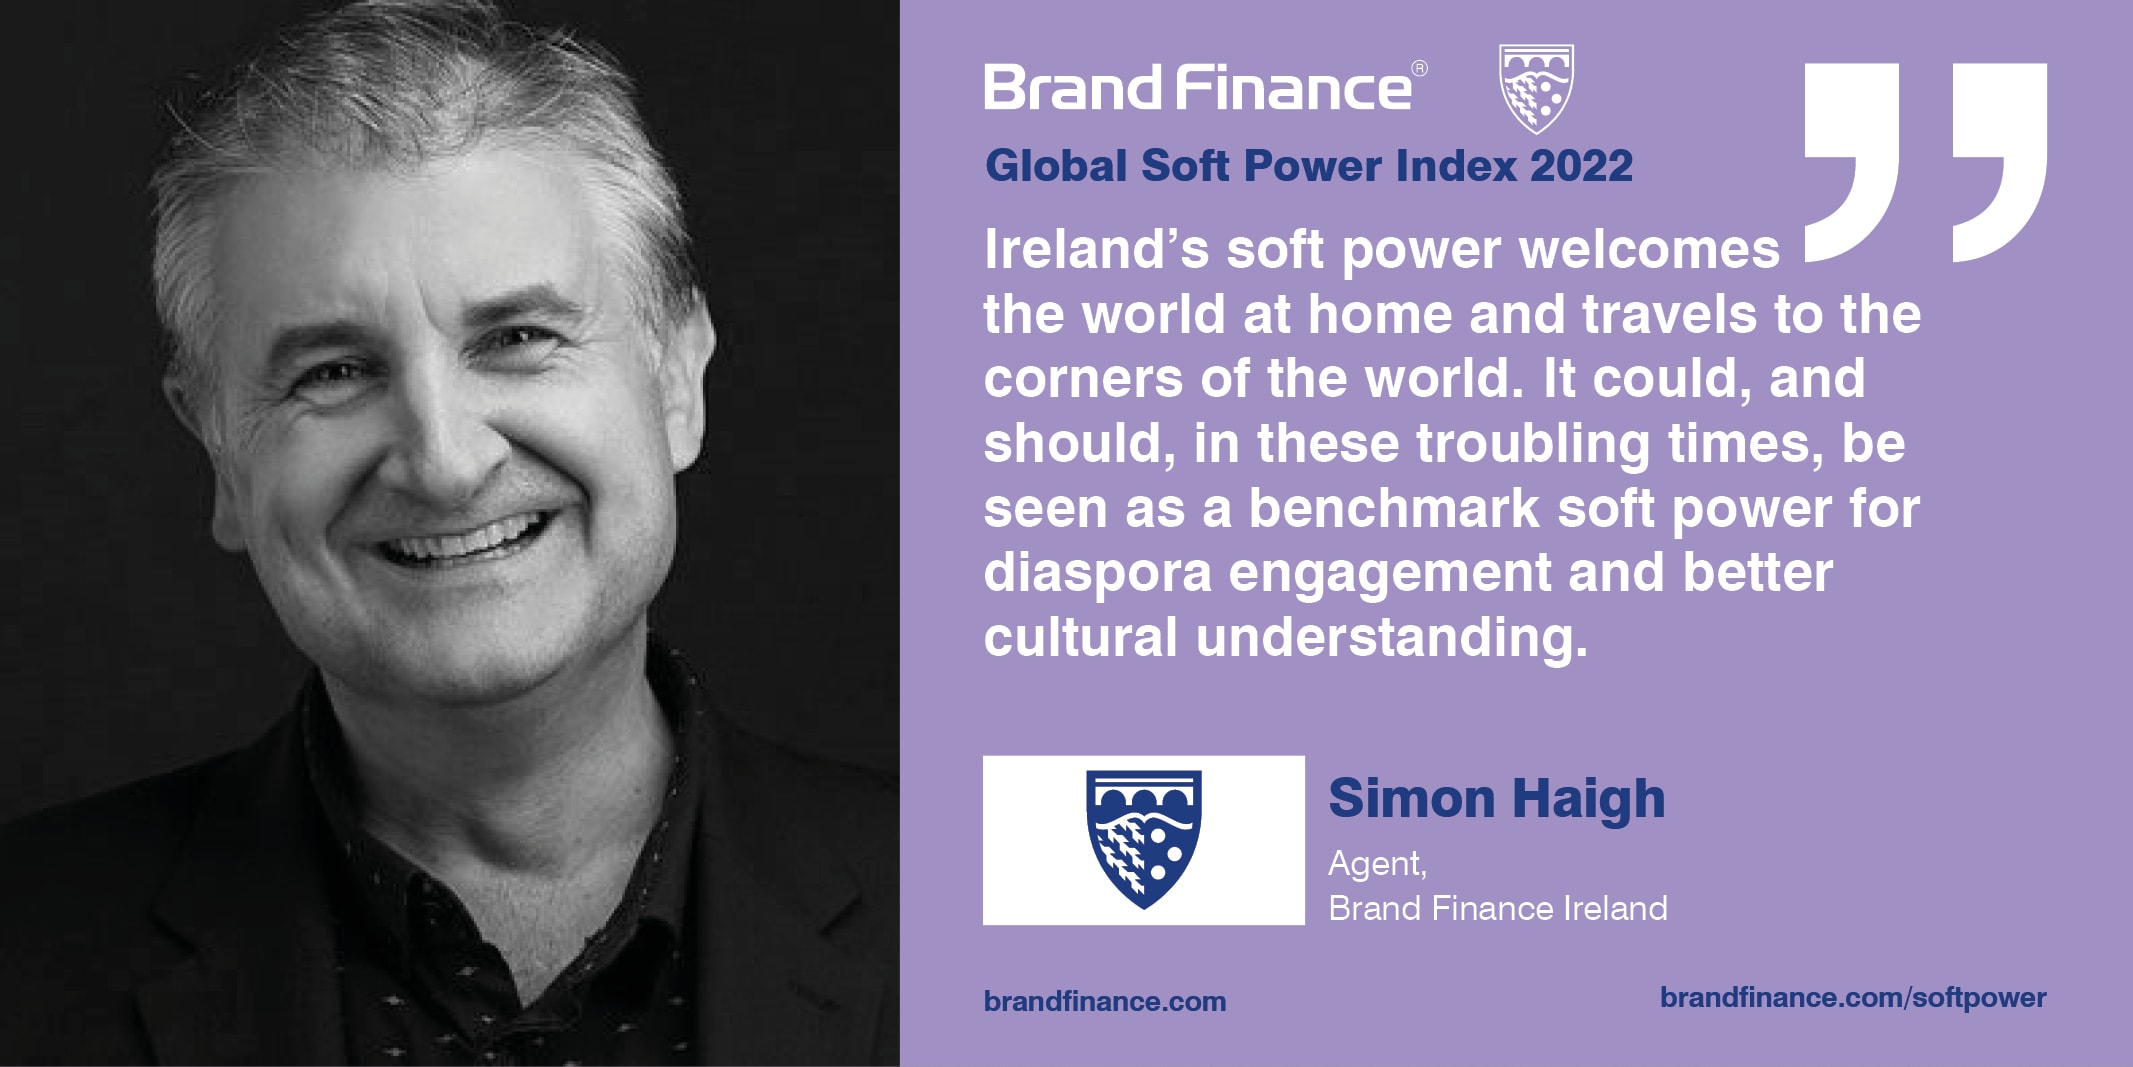 Simon Haigh, Agent, Brand Finance Ireland